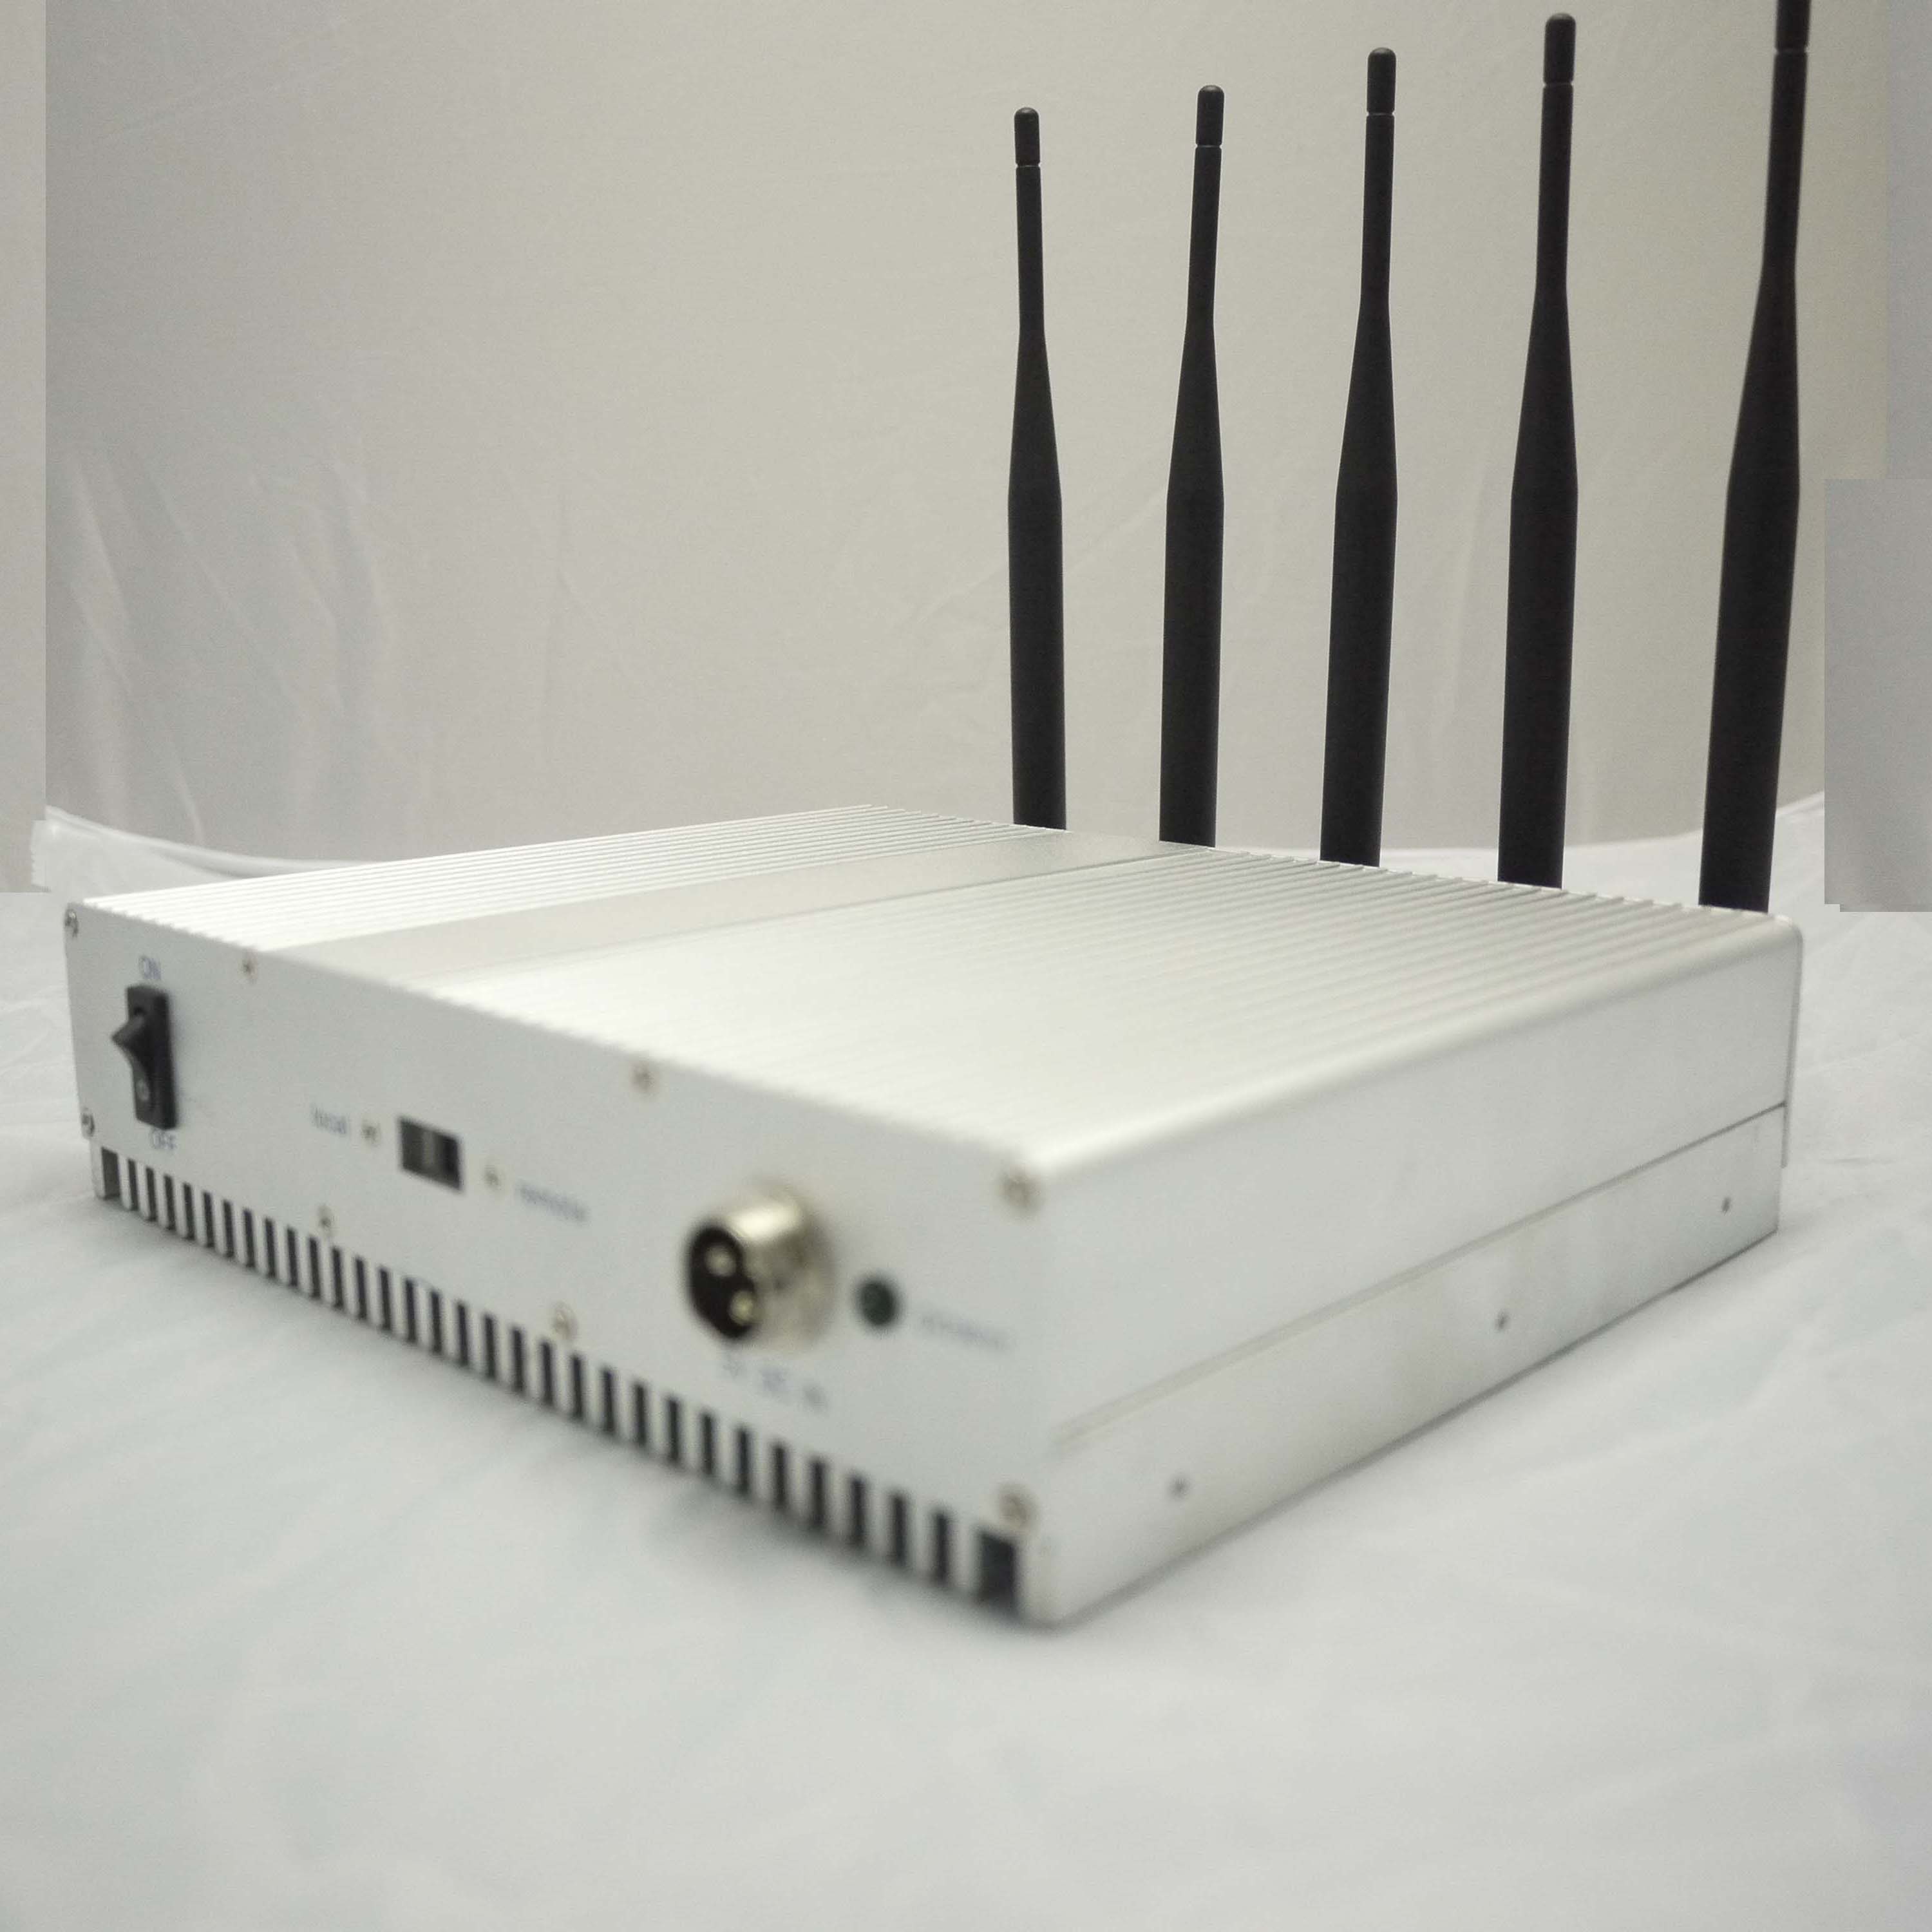 jammer kit online dating | Wholesale High Power Signal Jammer broadband shielding instrument